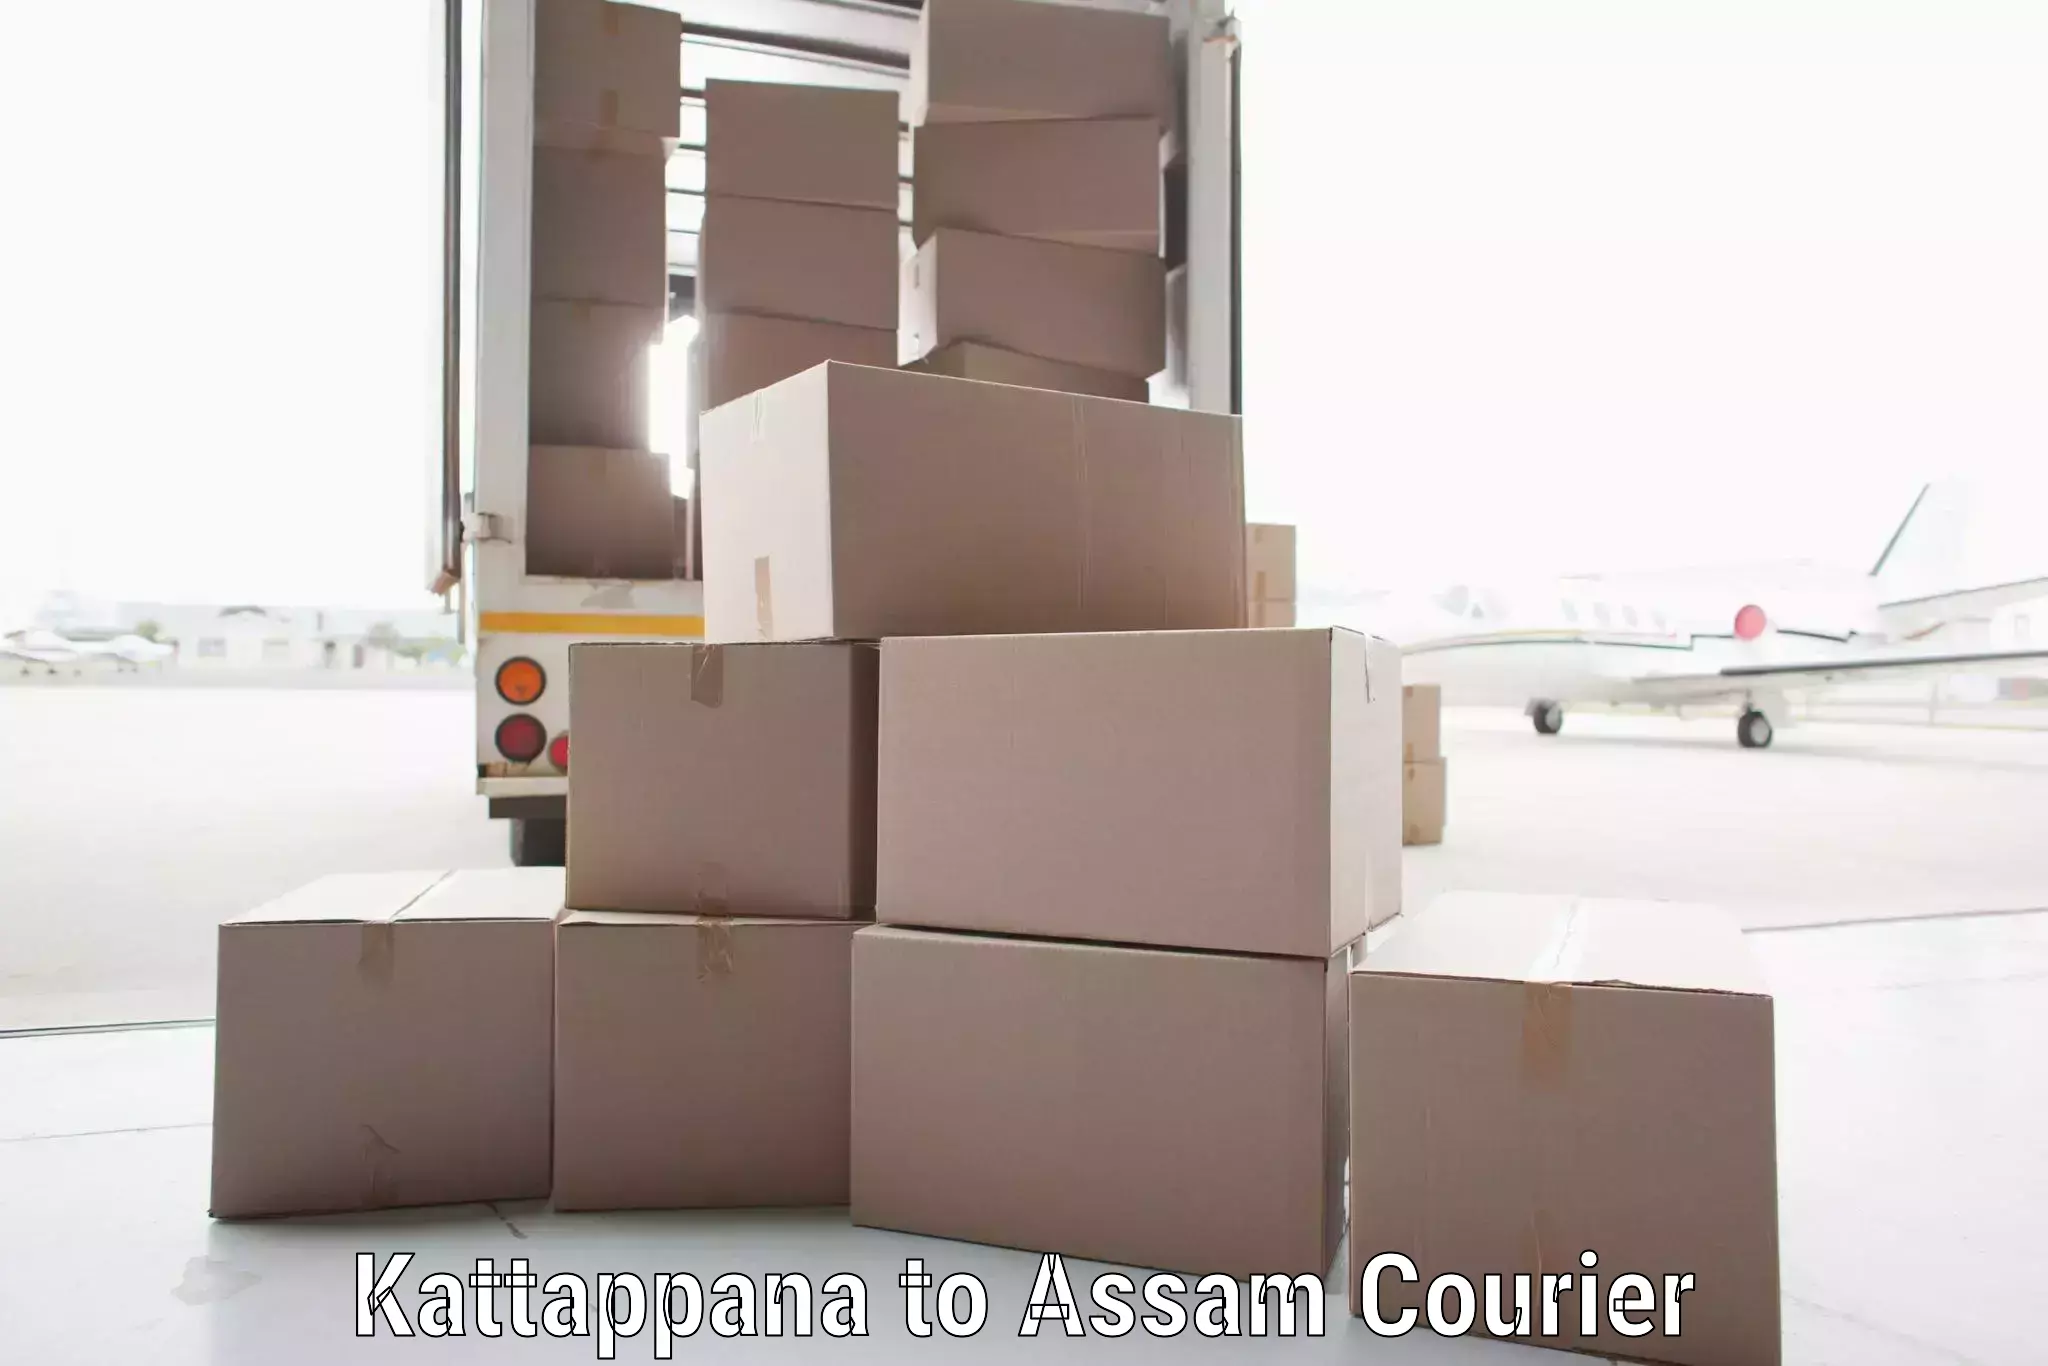 Courier service comparison in Kattappana to Guwahati University